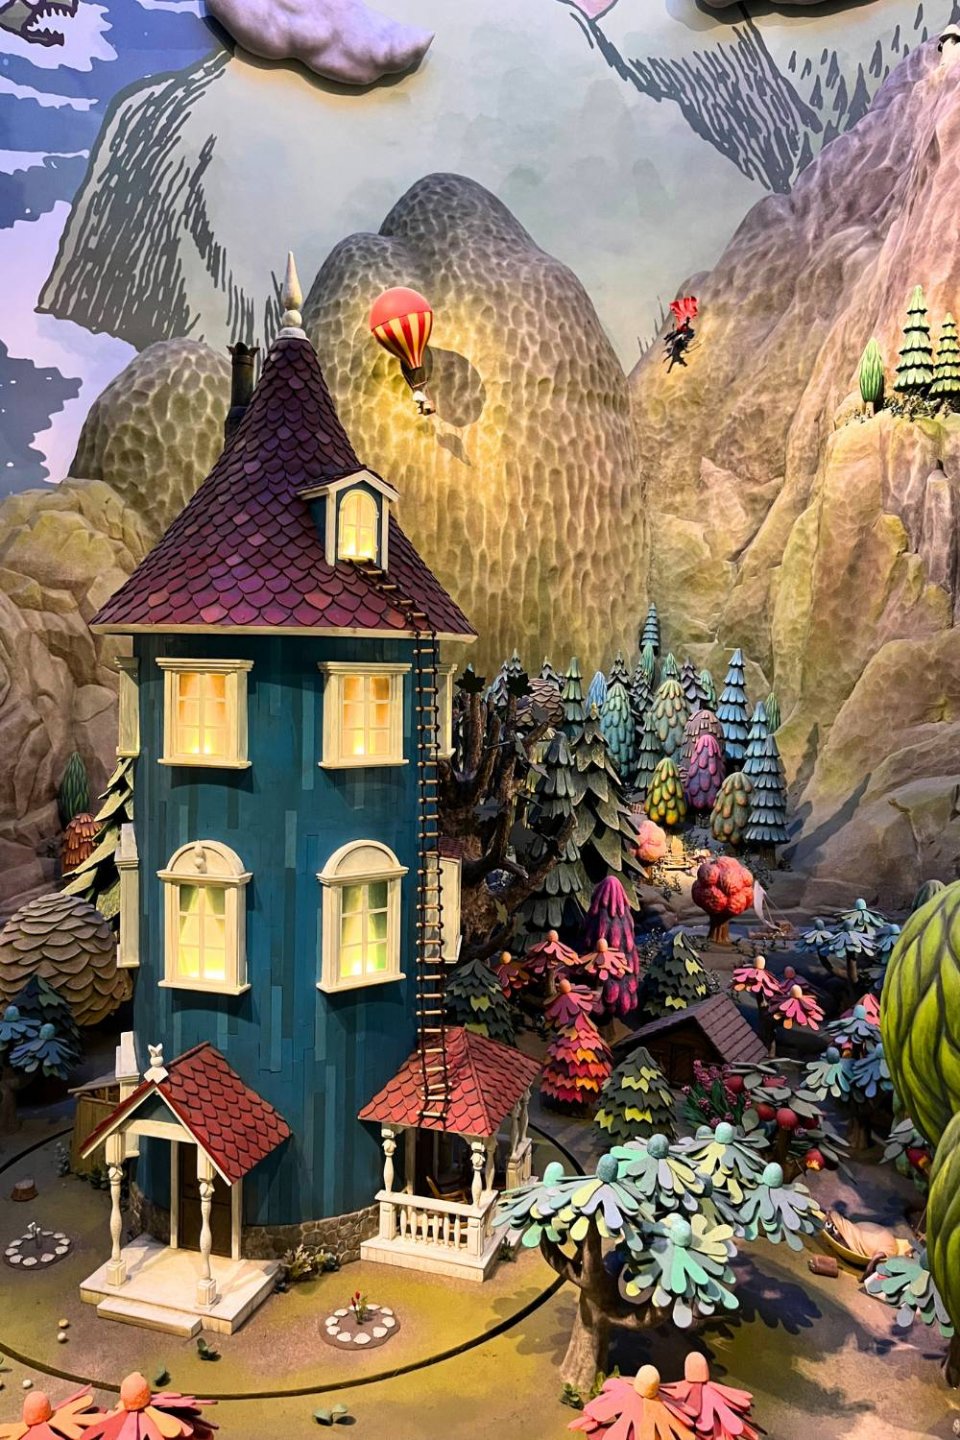 Moominvalley Park diorama